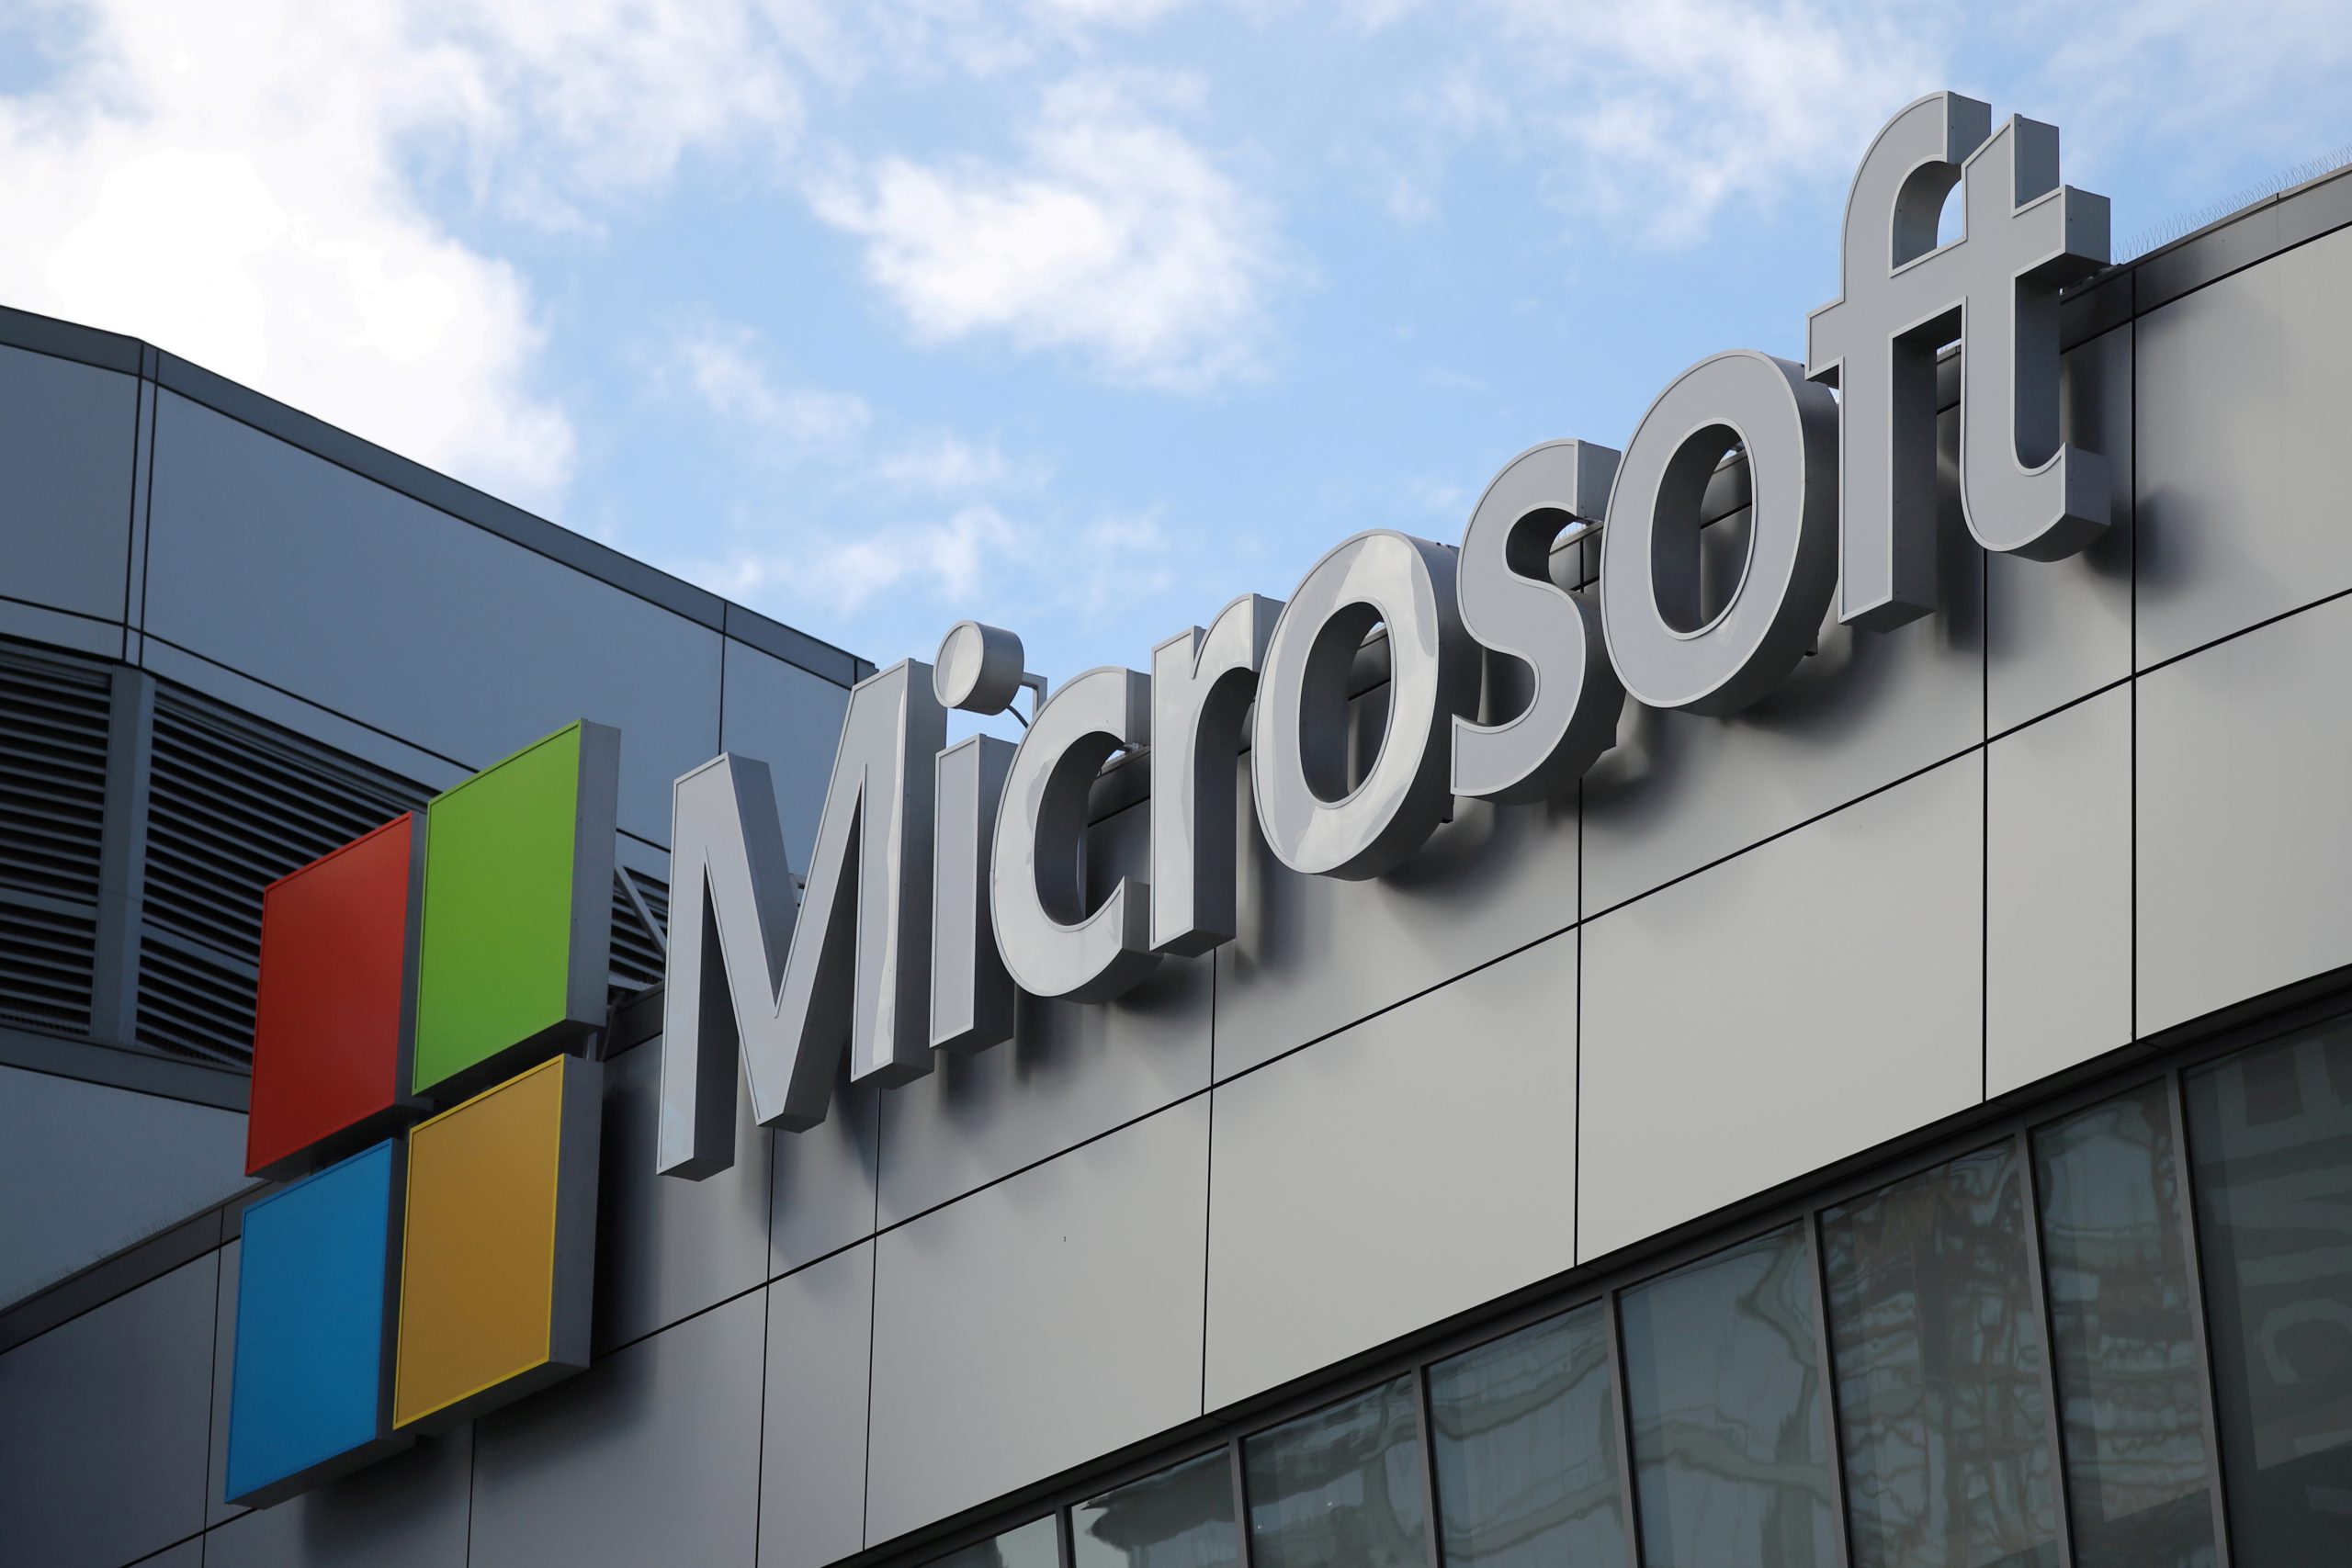 Microsoft: Αναστέλλει τις νέες πωλήσεις στη Ρωσία